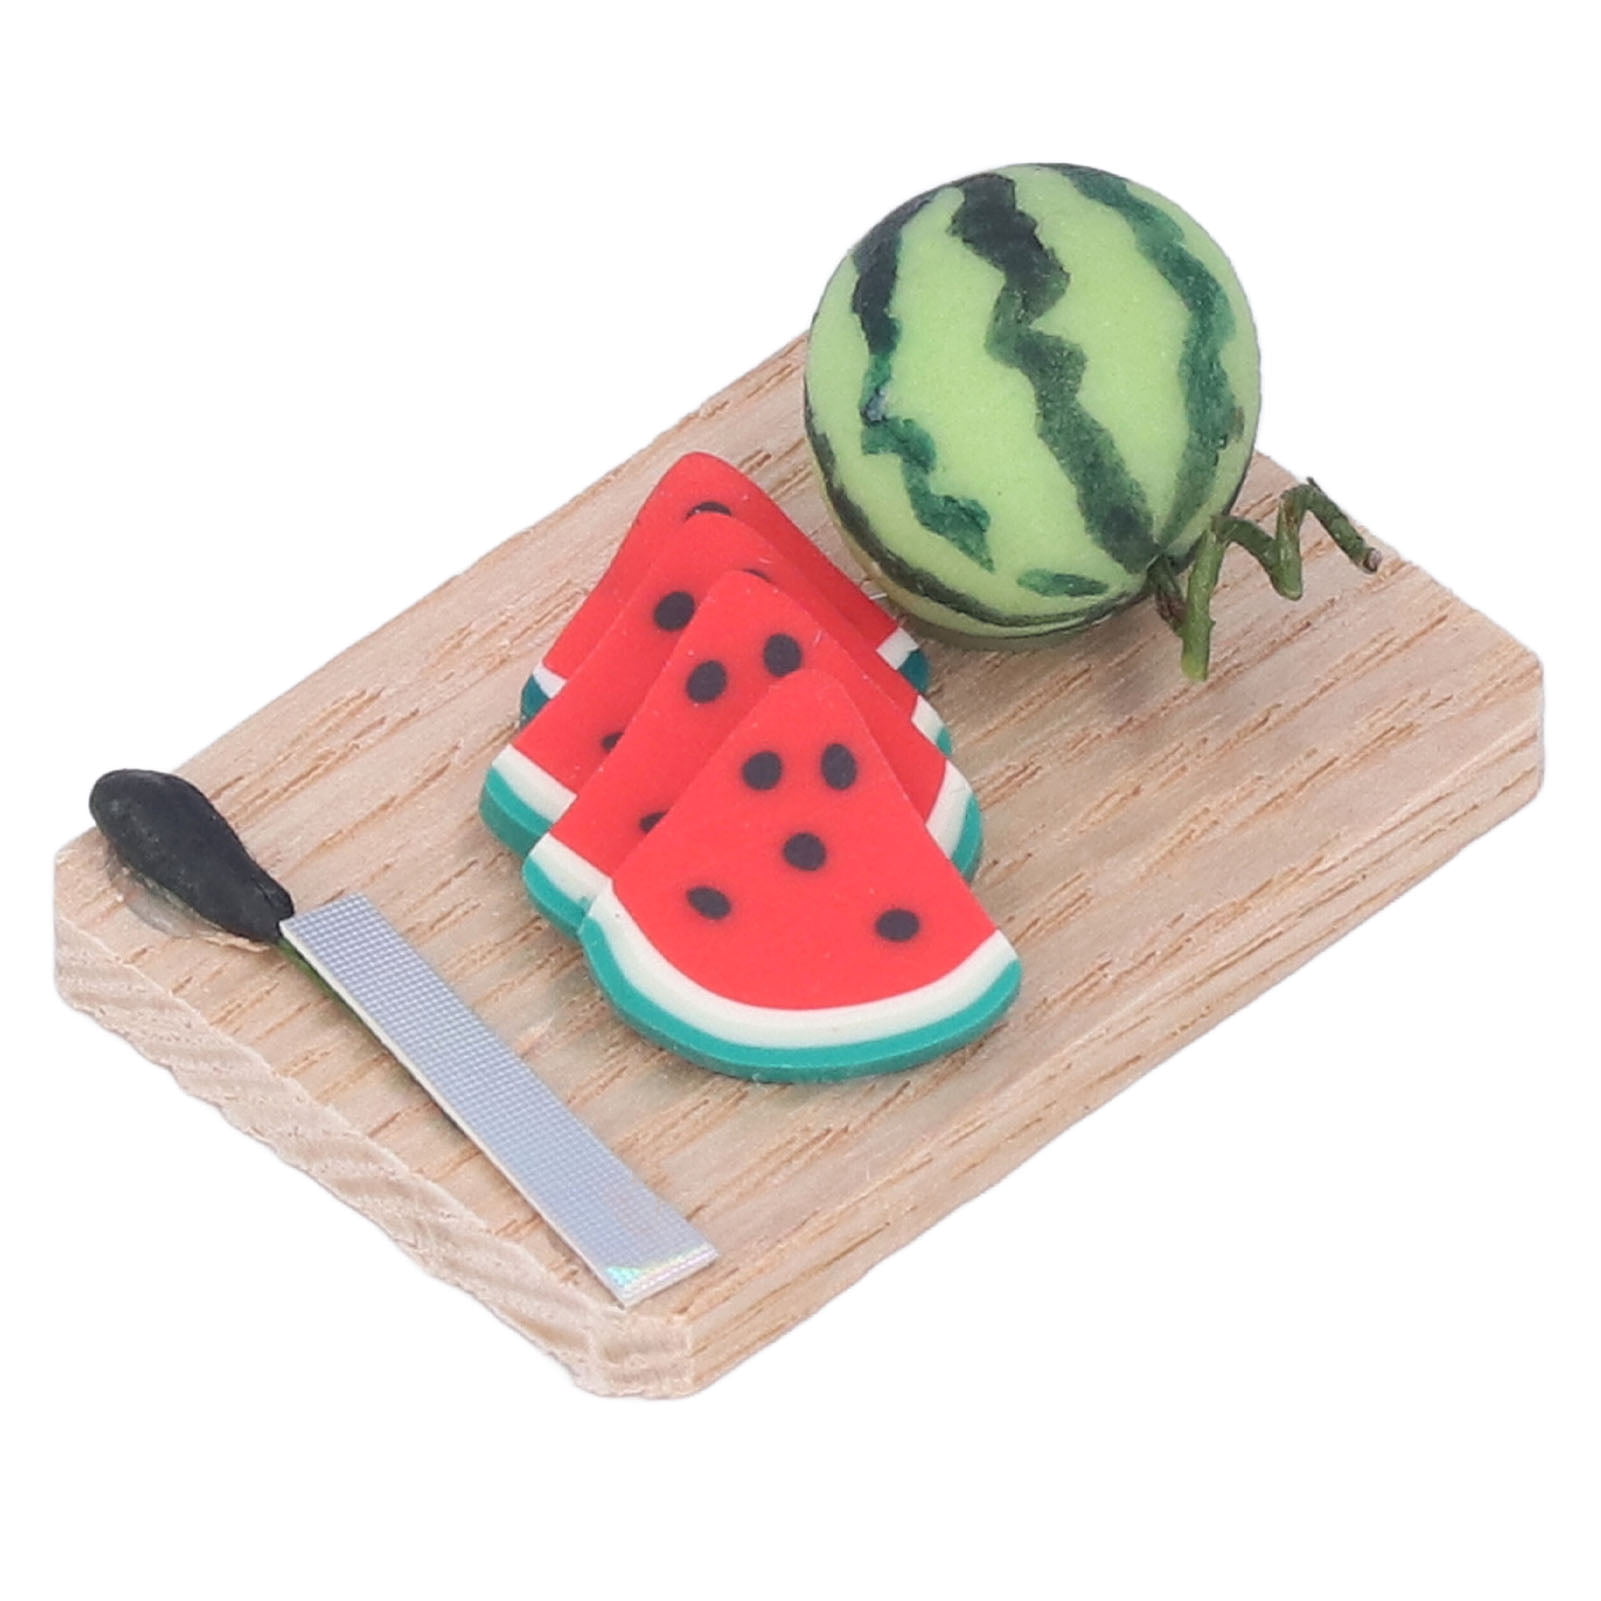 Miniature Watermelon,Miniature Fruit,Dollhouse Fruit,Dollhouse Watermelon,Dollhouse Decoration,Mini Watermelon,Small Watermelon